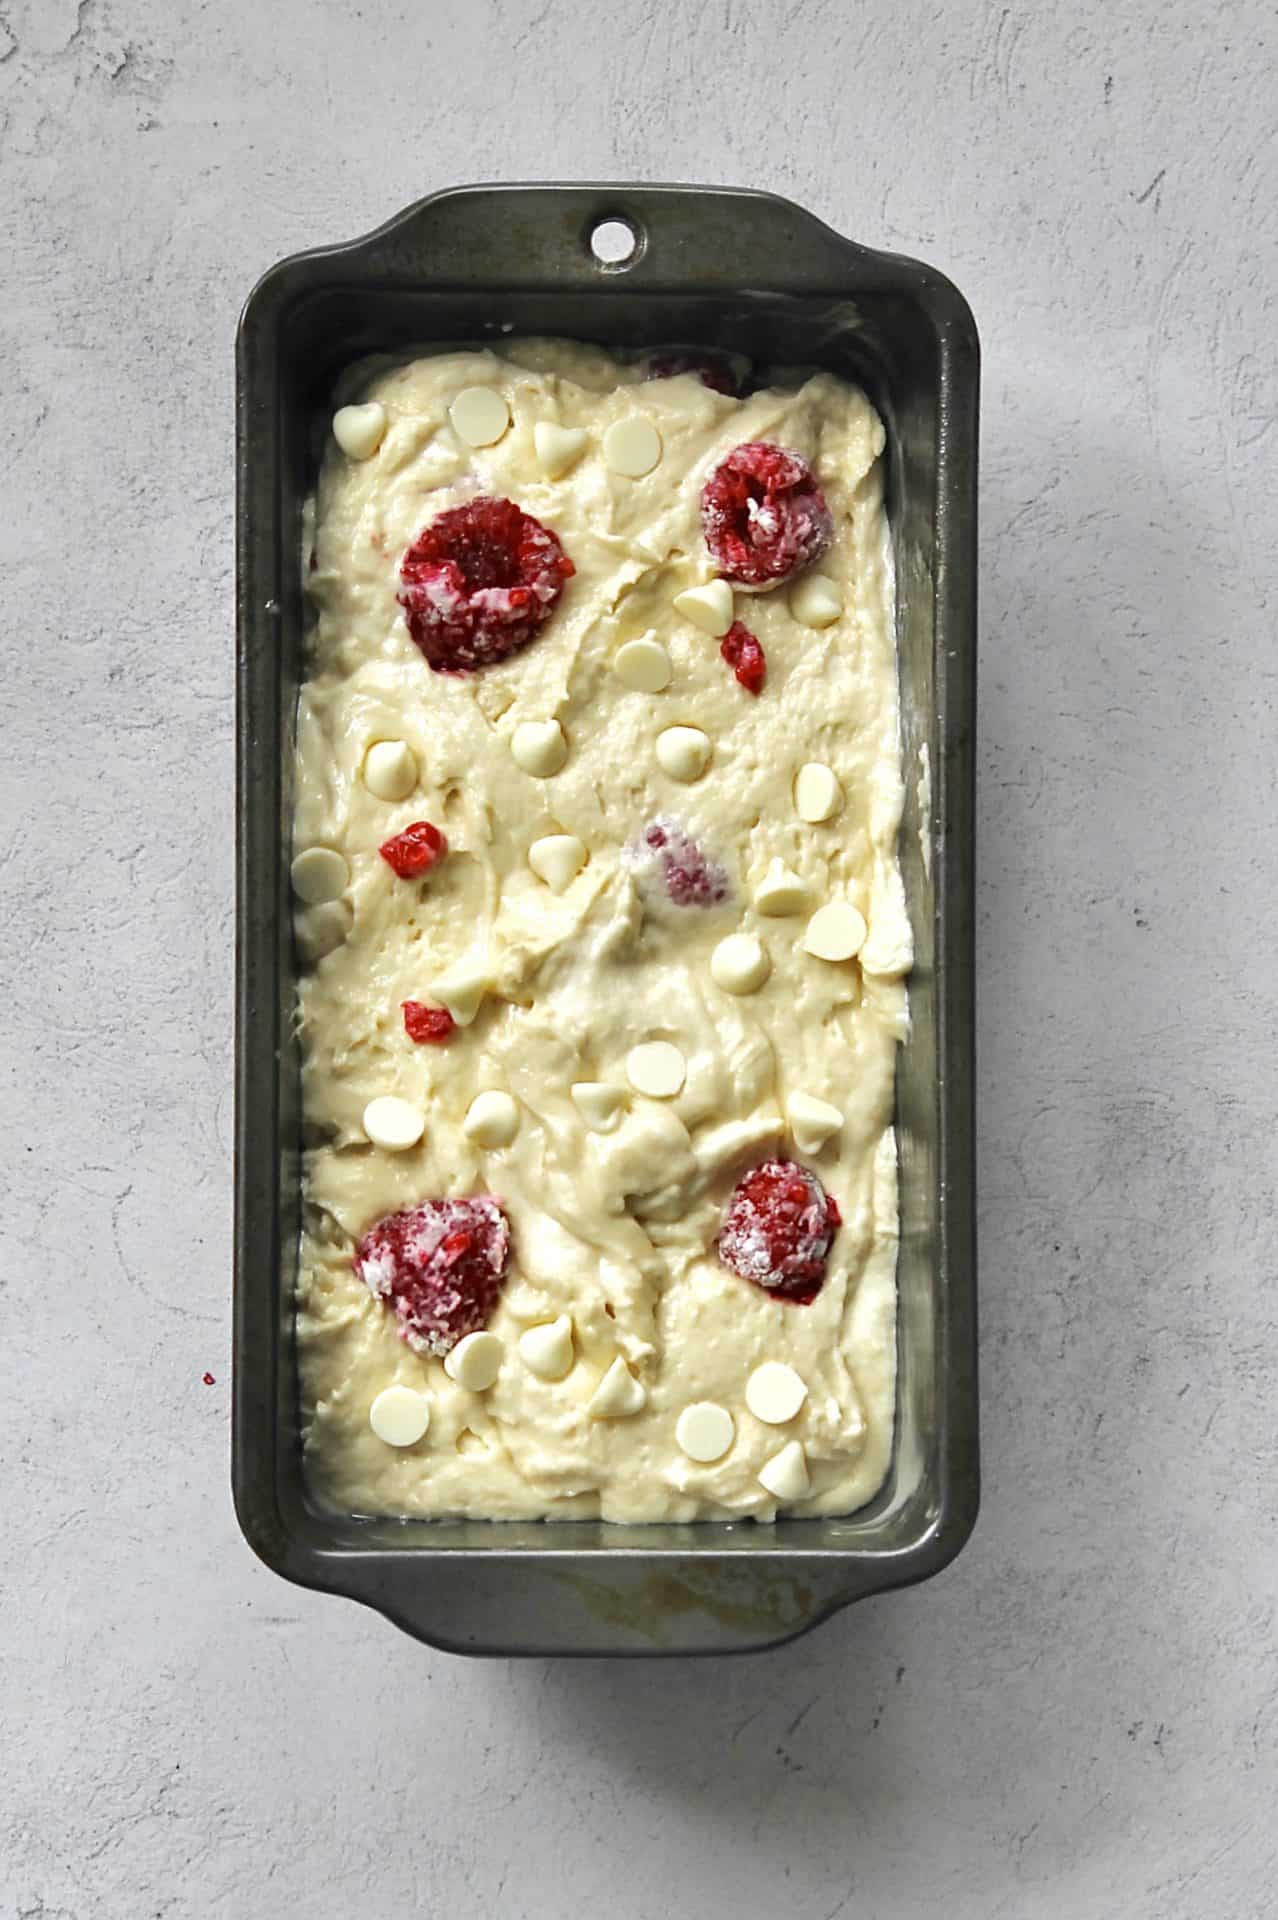 white chocolate and raspberries in loaf cake